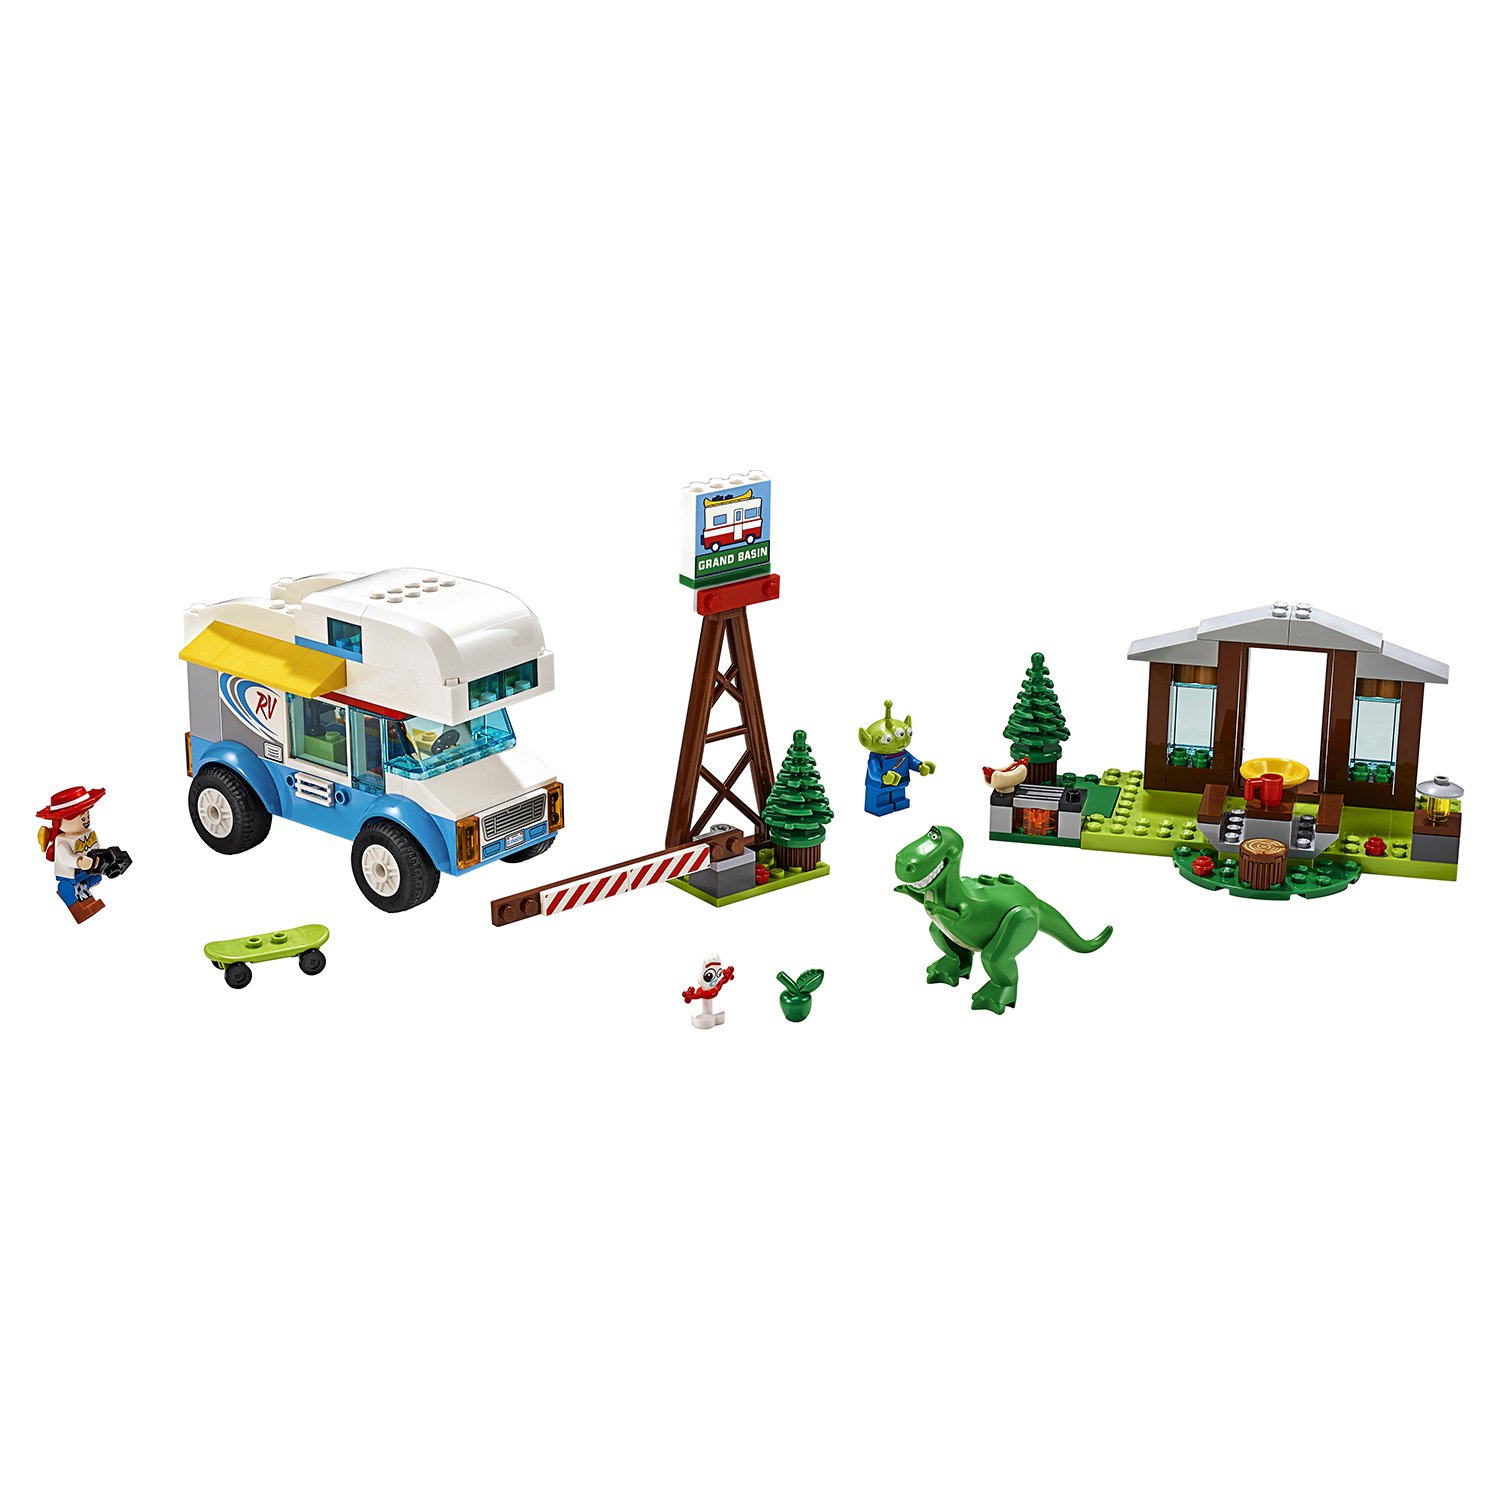 Lego Toy Story 10769 Весёлый отпуск